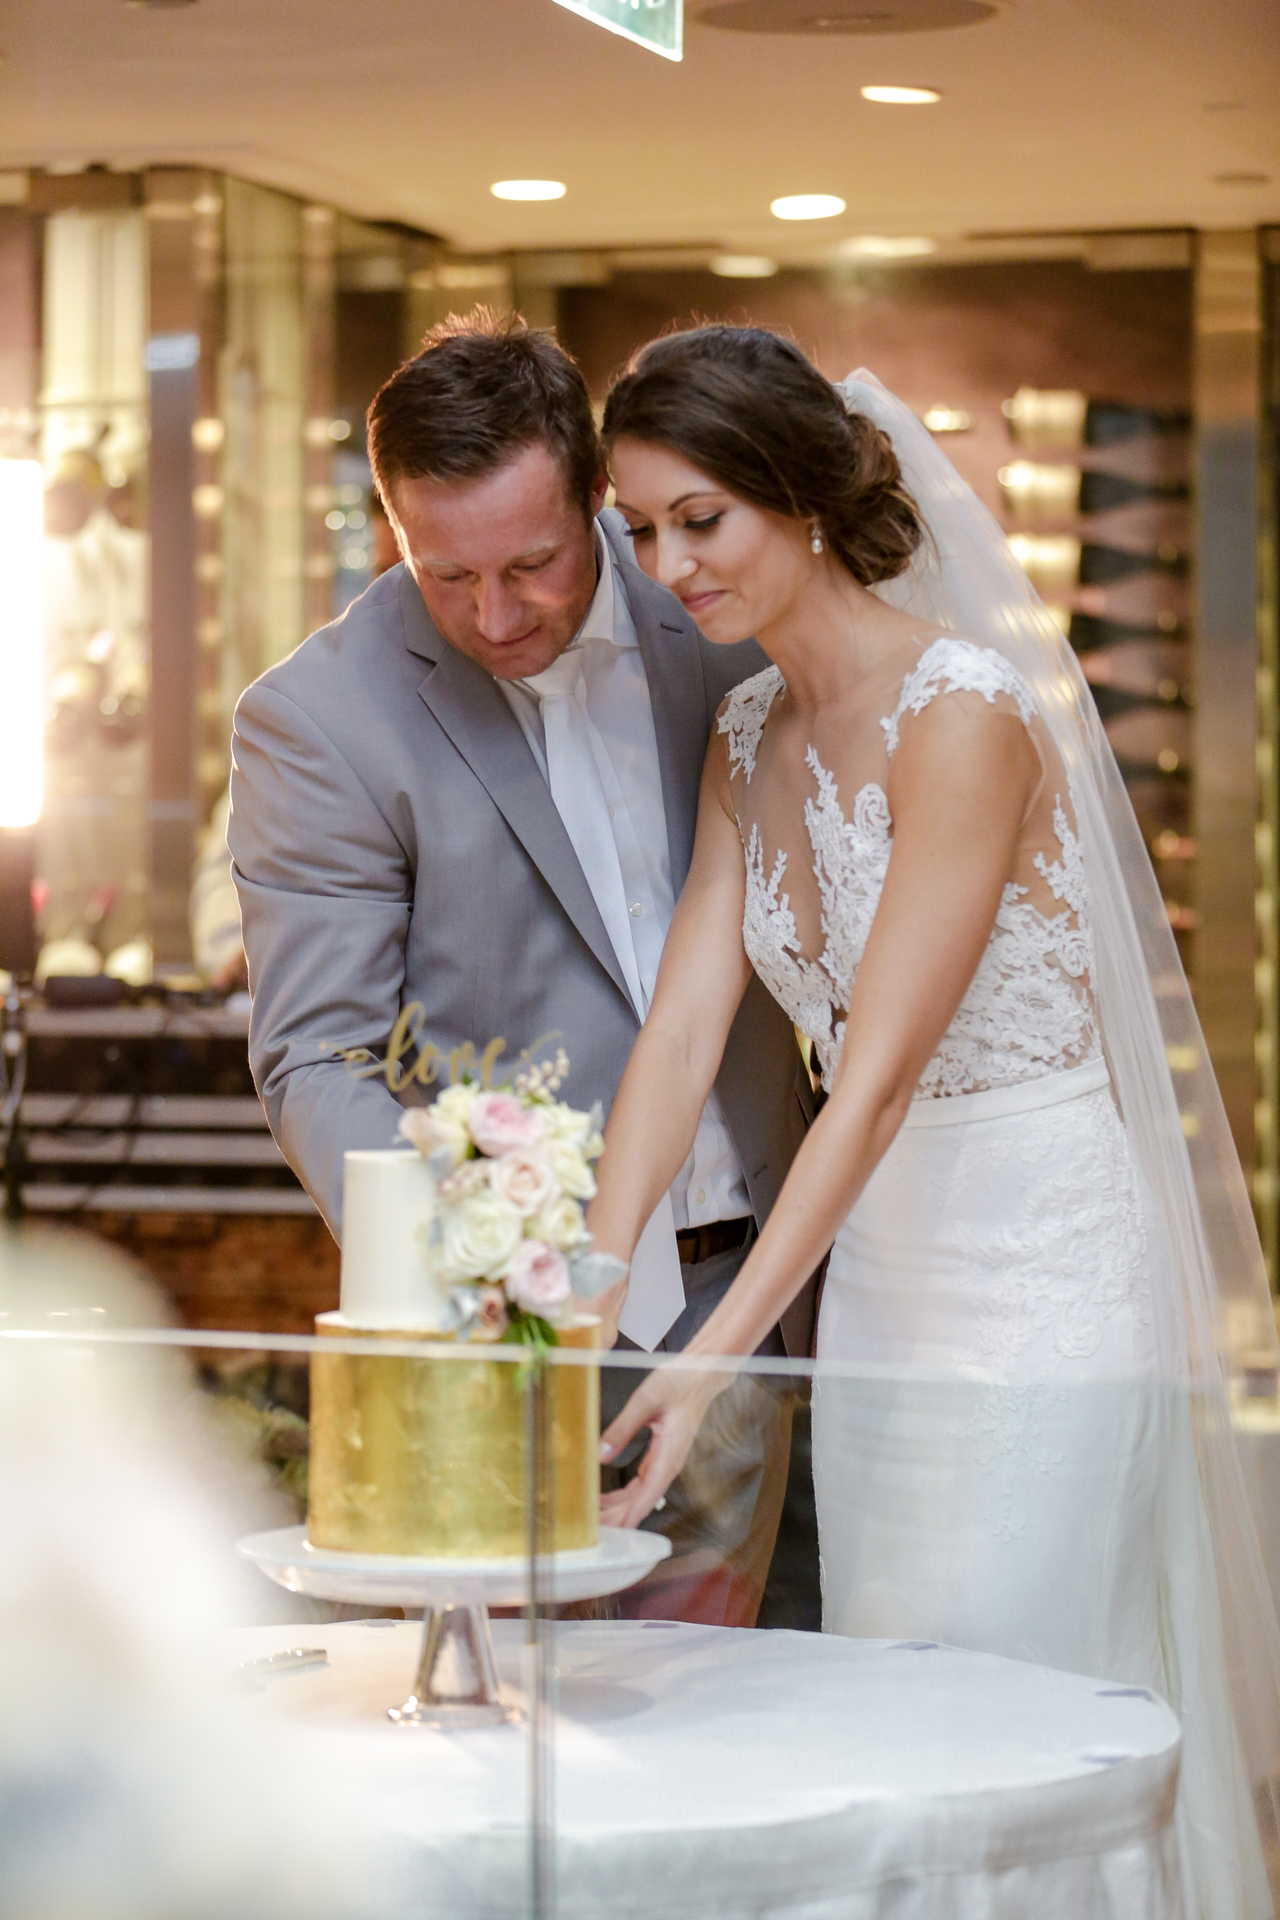 Sydney wedding cake is cut by bride and groom